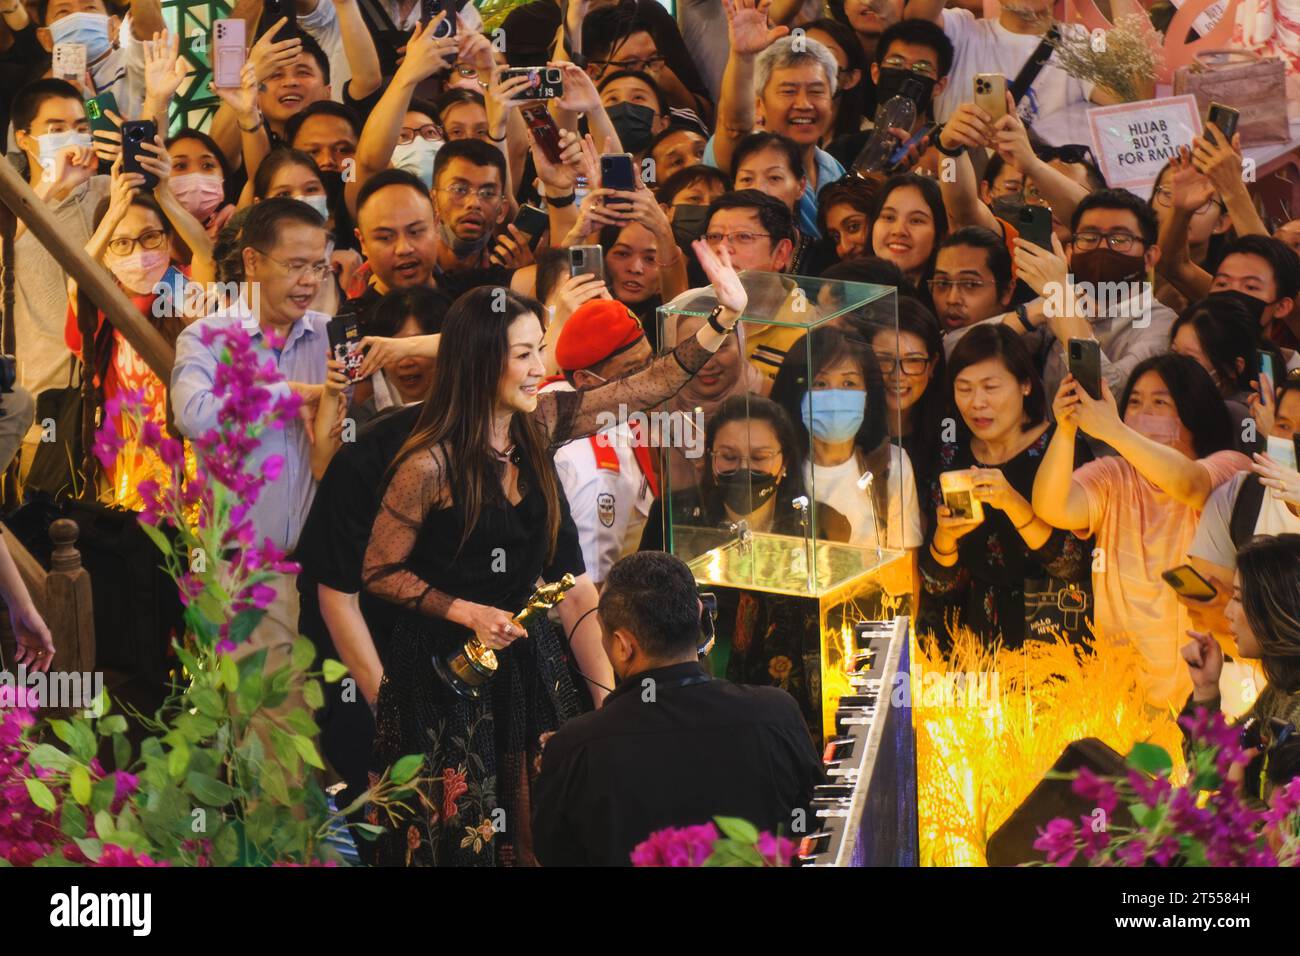 Oscar Winner Tan Sri Datuk Michelle Yeoh at the homecoming  event at Pavilion Kuala Lumpur Stock Photo